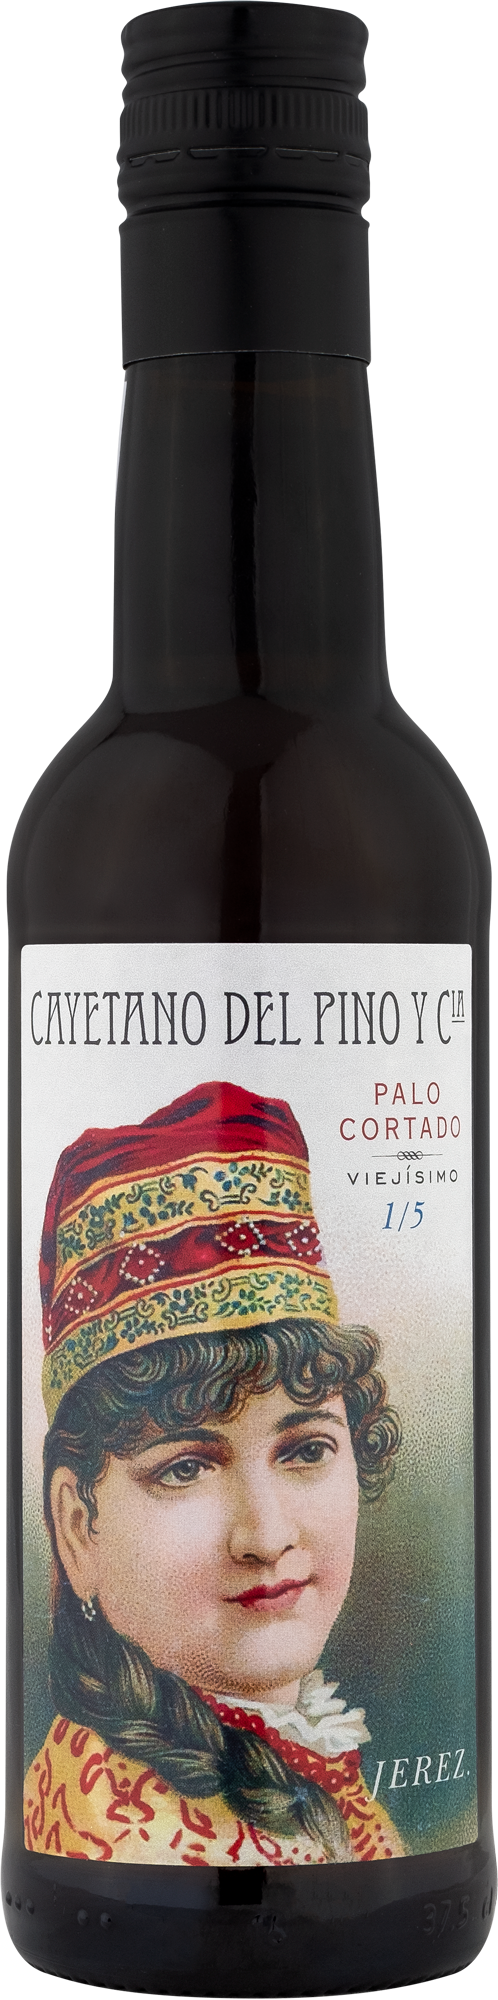 Cayetano del Pino - Palo Cortado - 1/5 Viejisimo - DO Jerez-Xérès-Sherry 375 ml (Kendt fra Radiotekets Sherry-podcast )